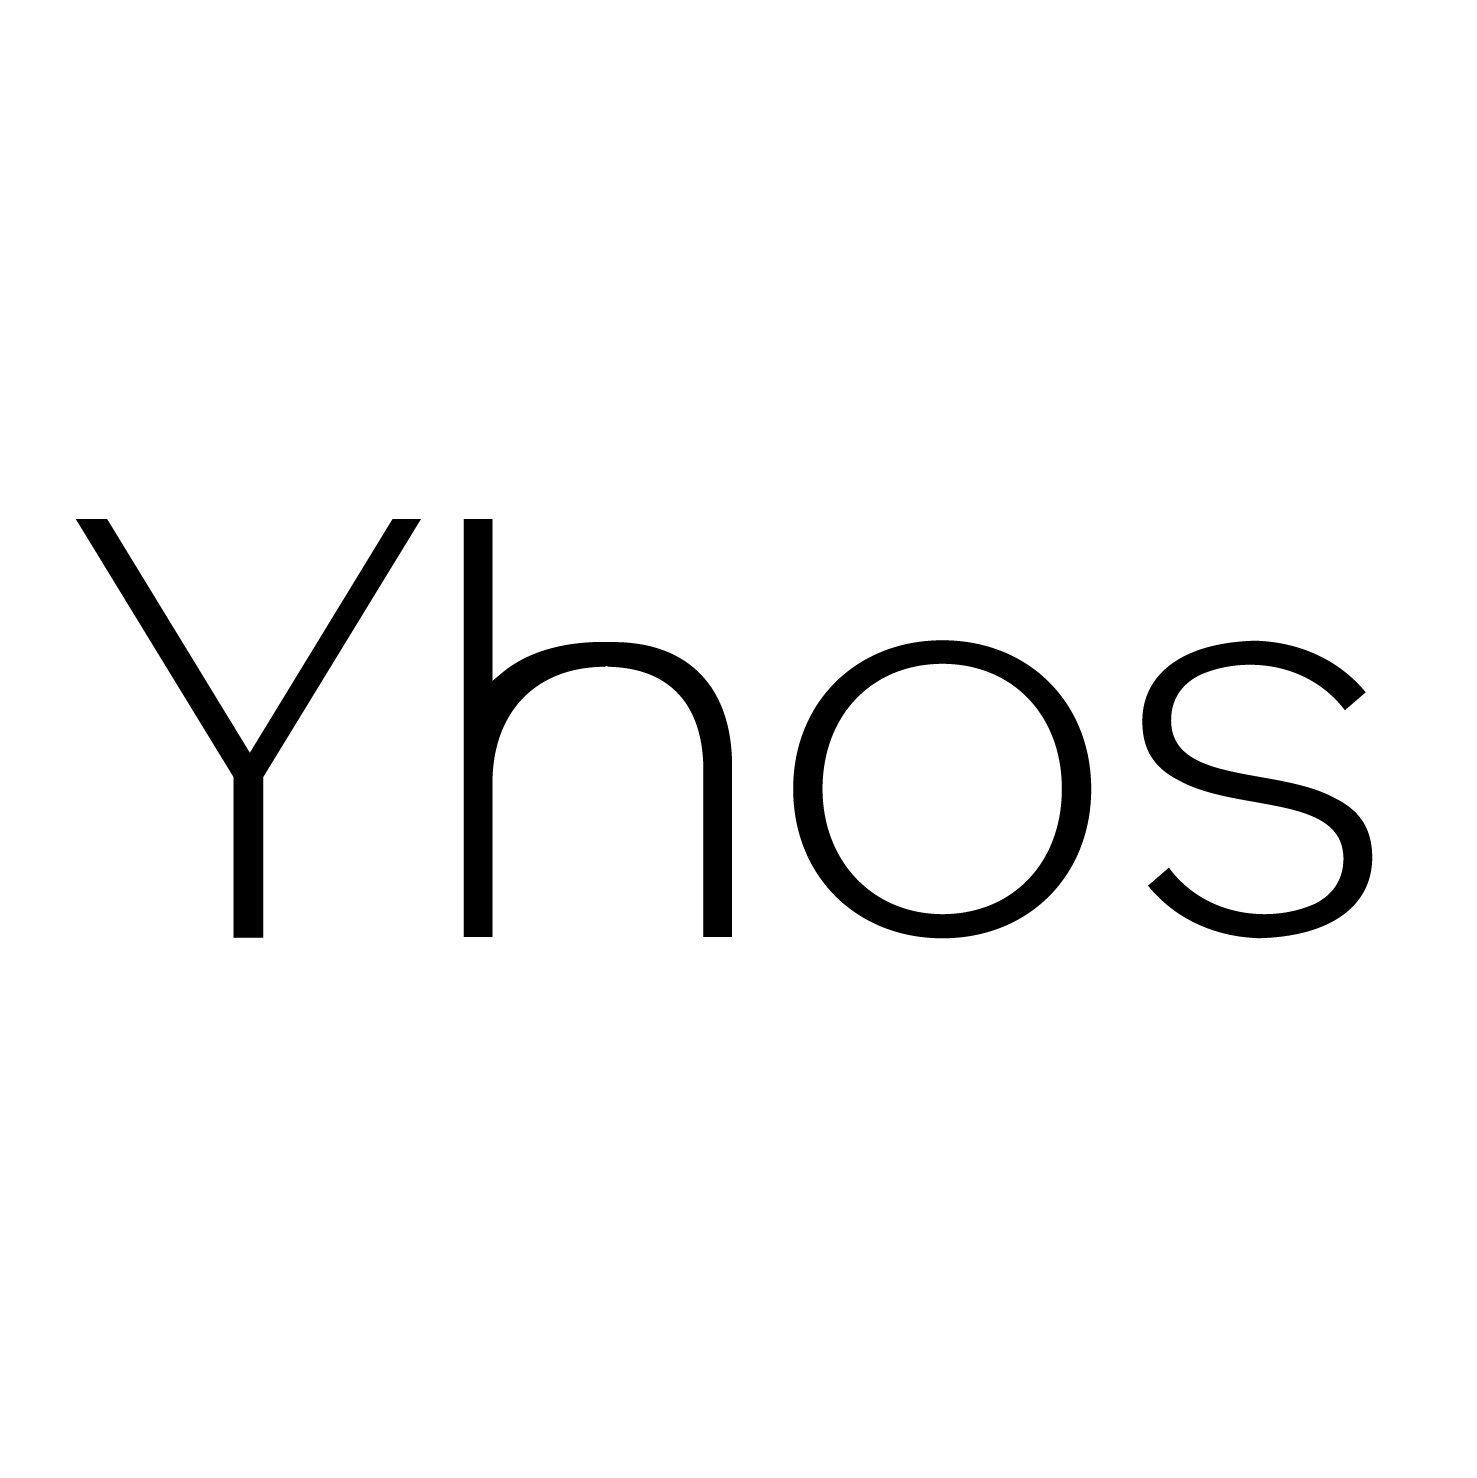 Yhos-logo